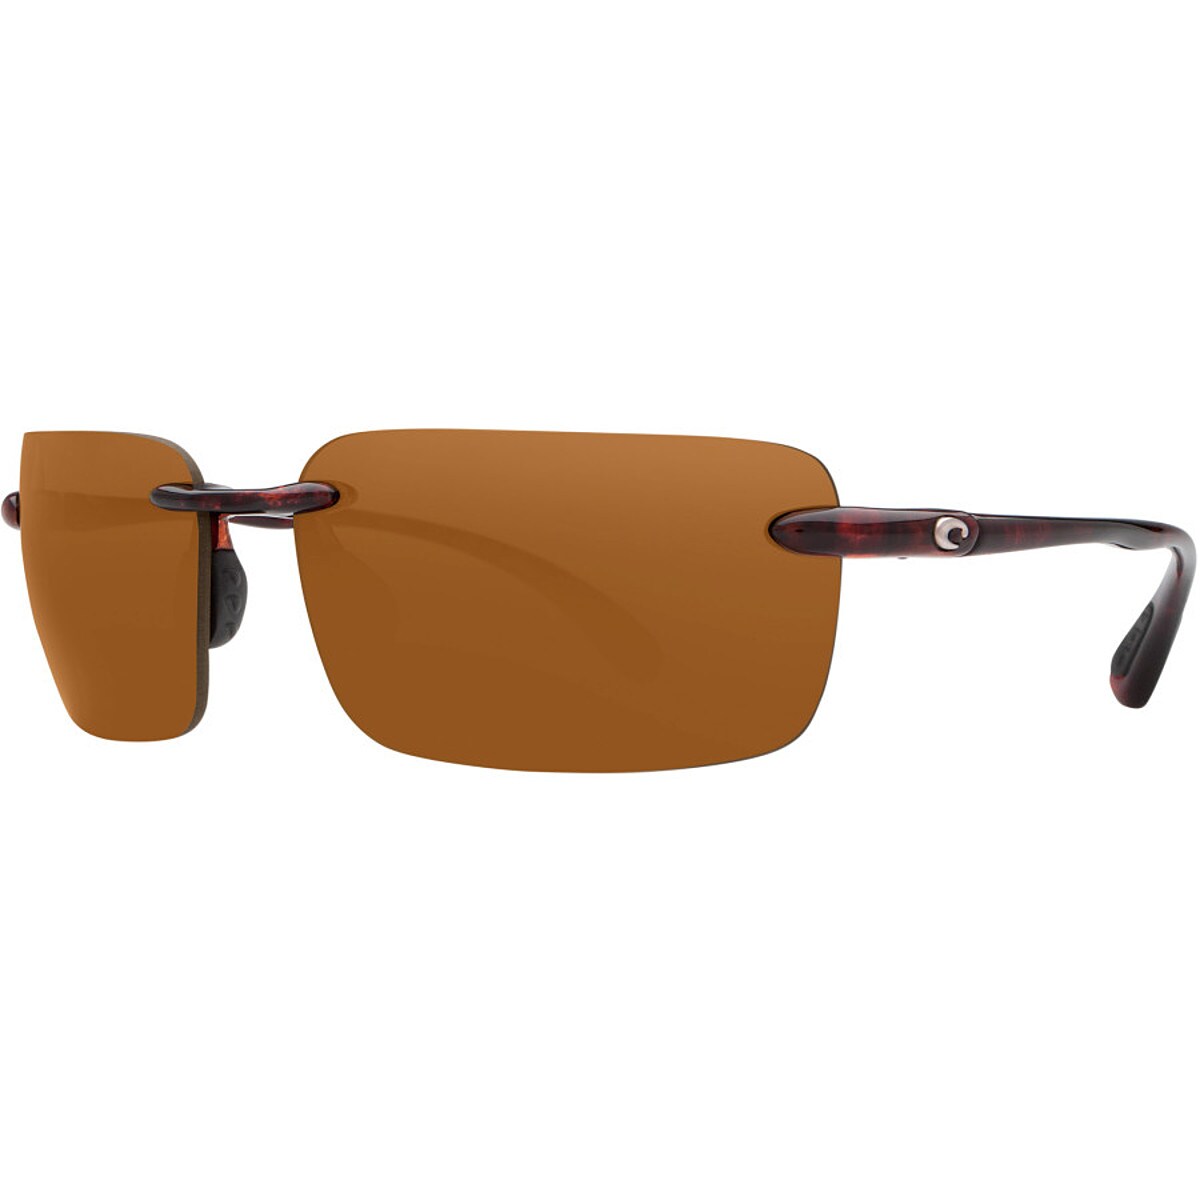 Costa Cayan 580P Polarized Sunglasses Tortoise Amber One Size